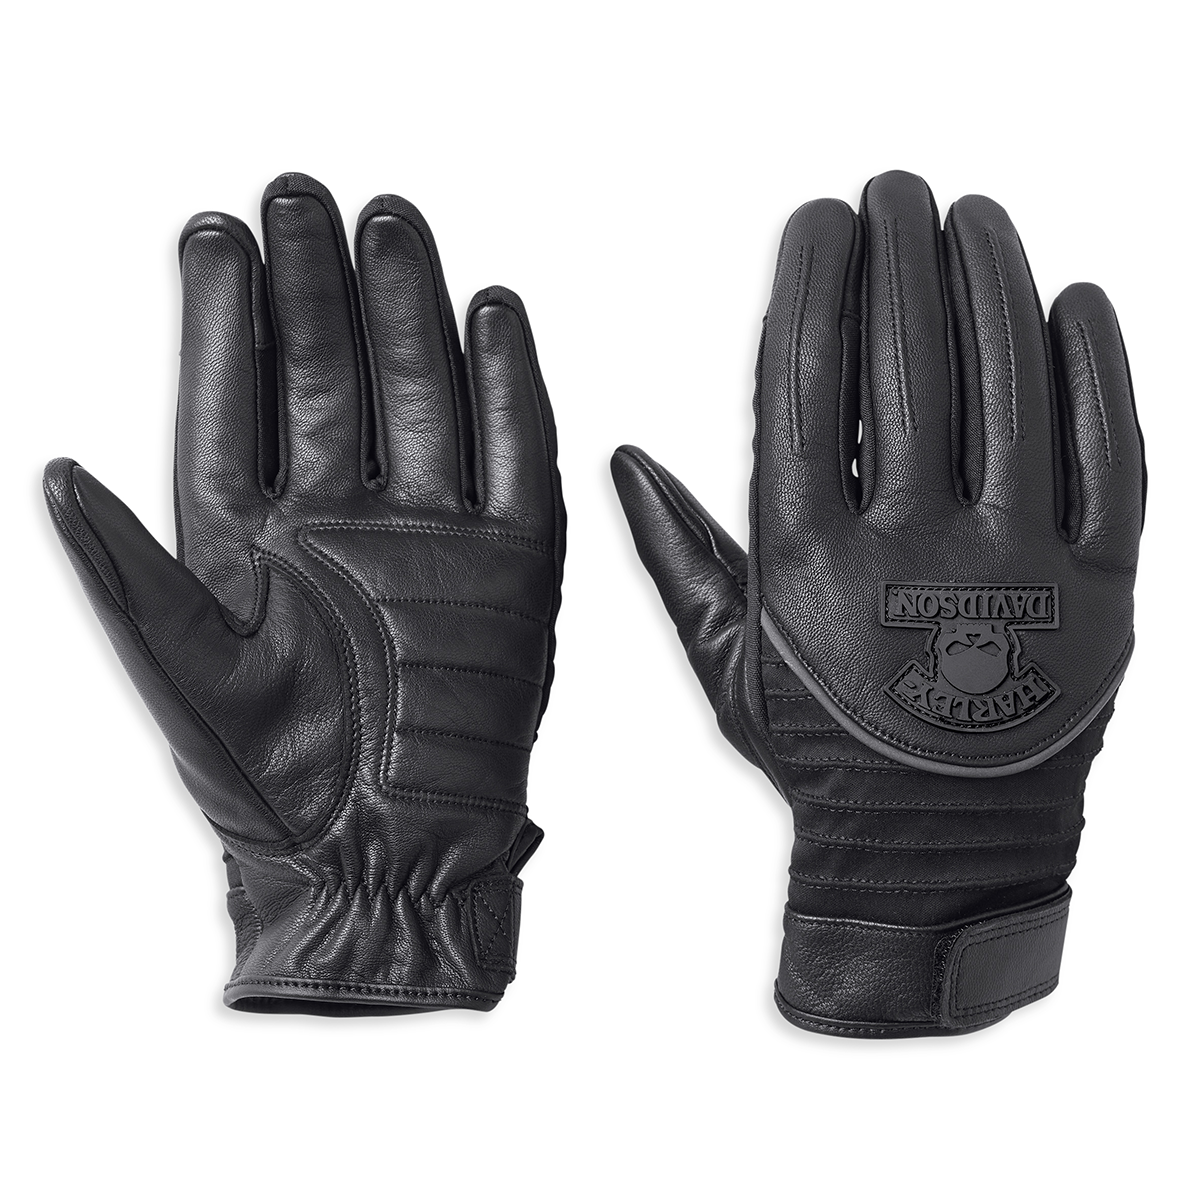 Harley-Davidson Men's Willie G. Mixed Media Gloves